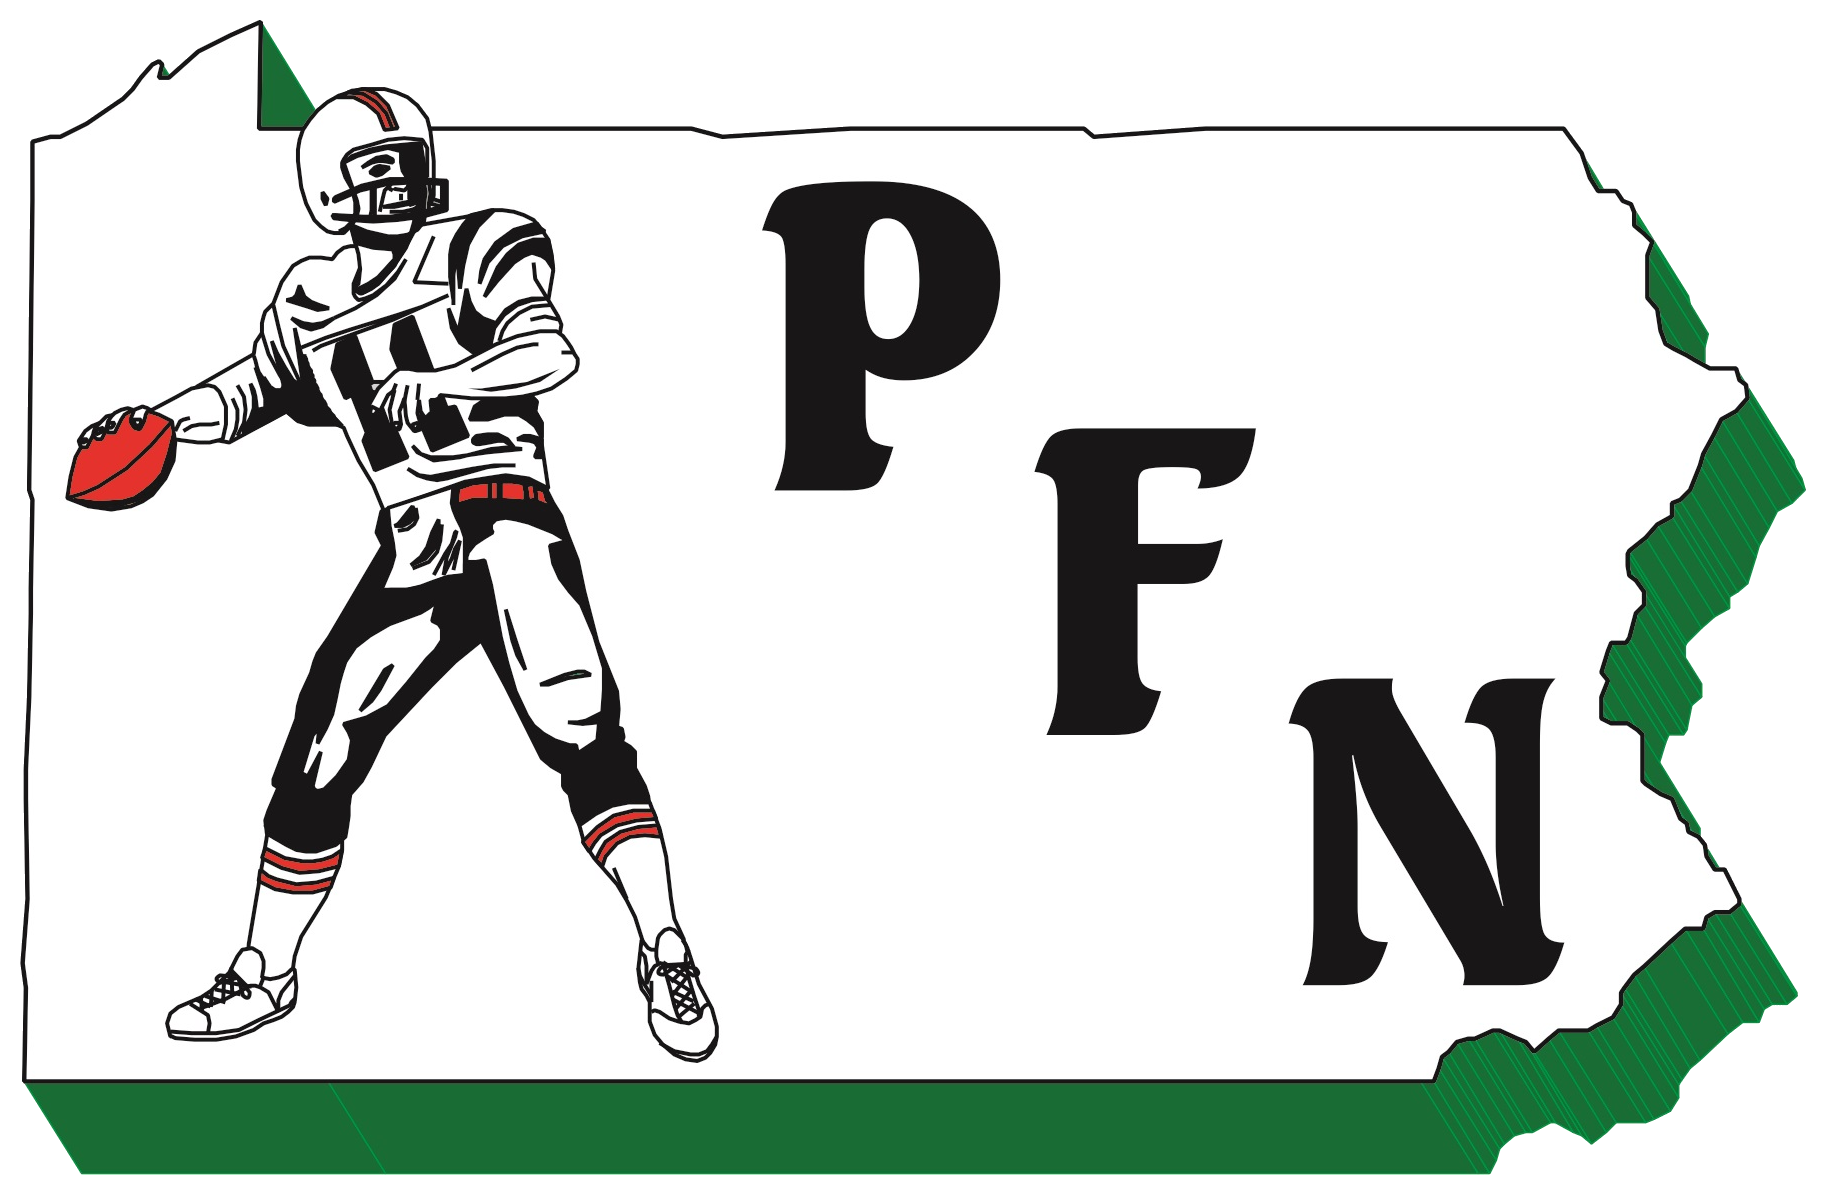 PA Football News - Your #1 Source for Pennsylvania High School Football!